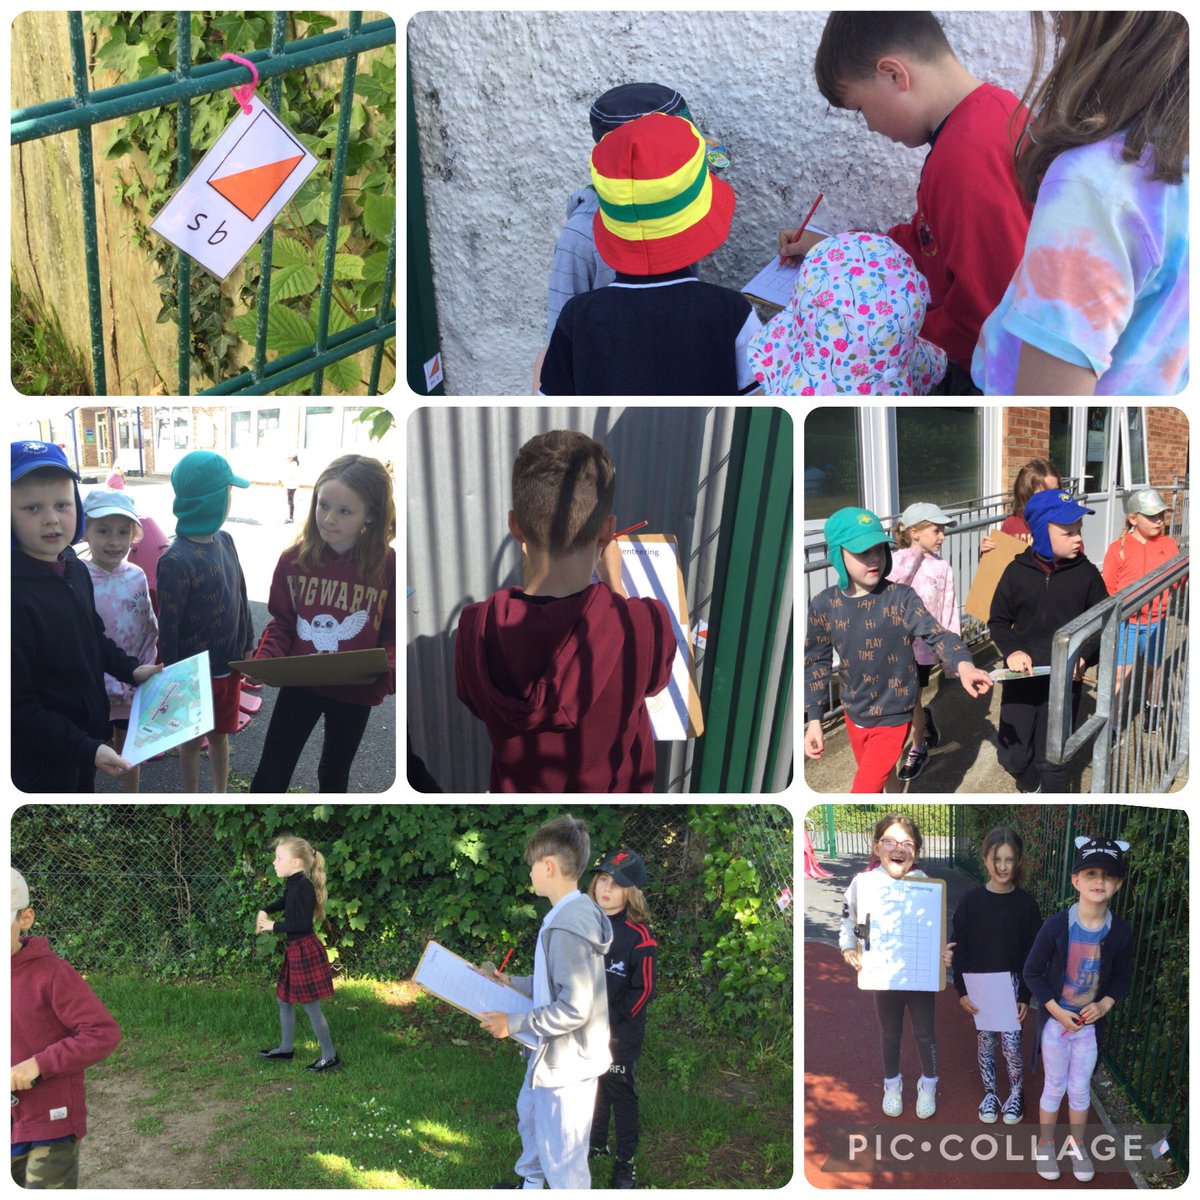 We are having great fun orienteering in our school grounds #OutdoorClassroomDay #humanities #healthandwellbeing #orienteering